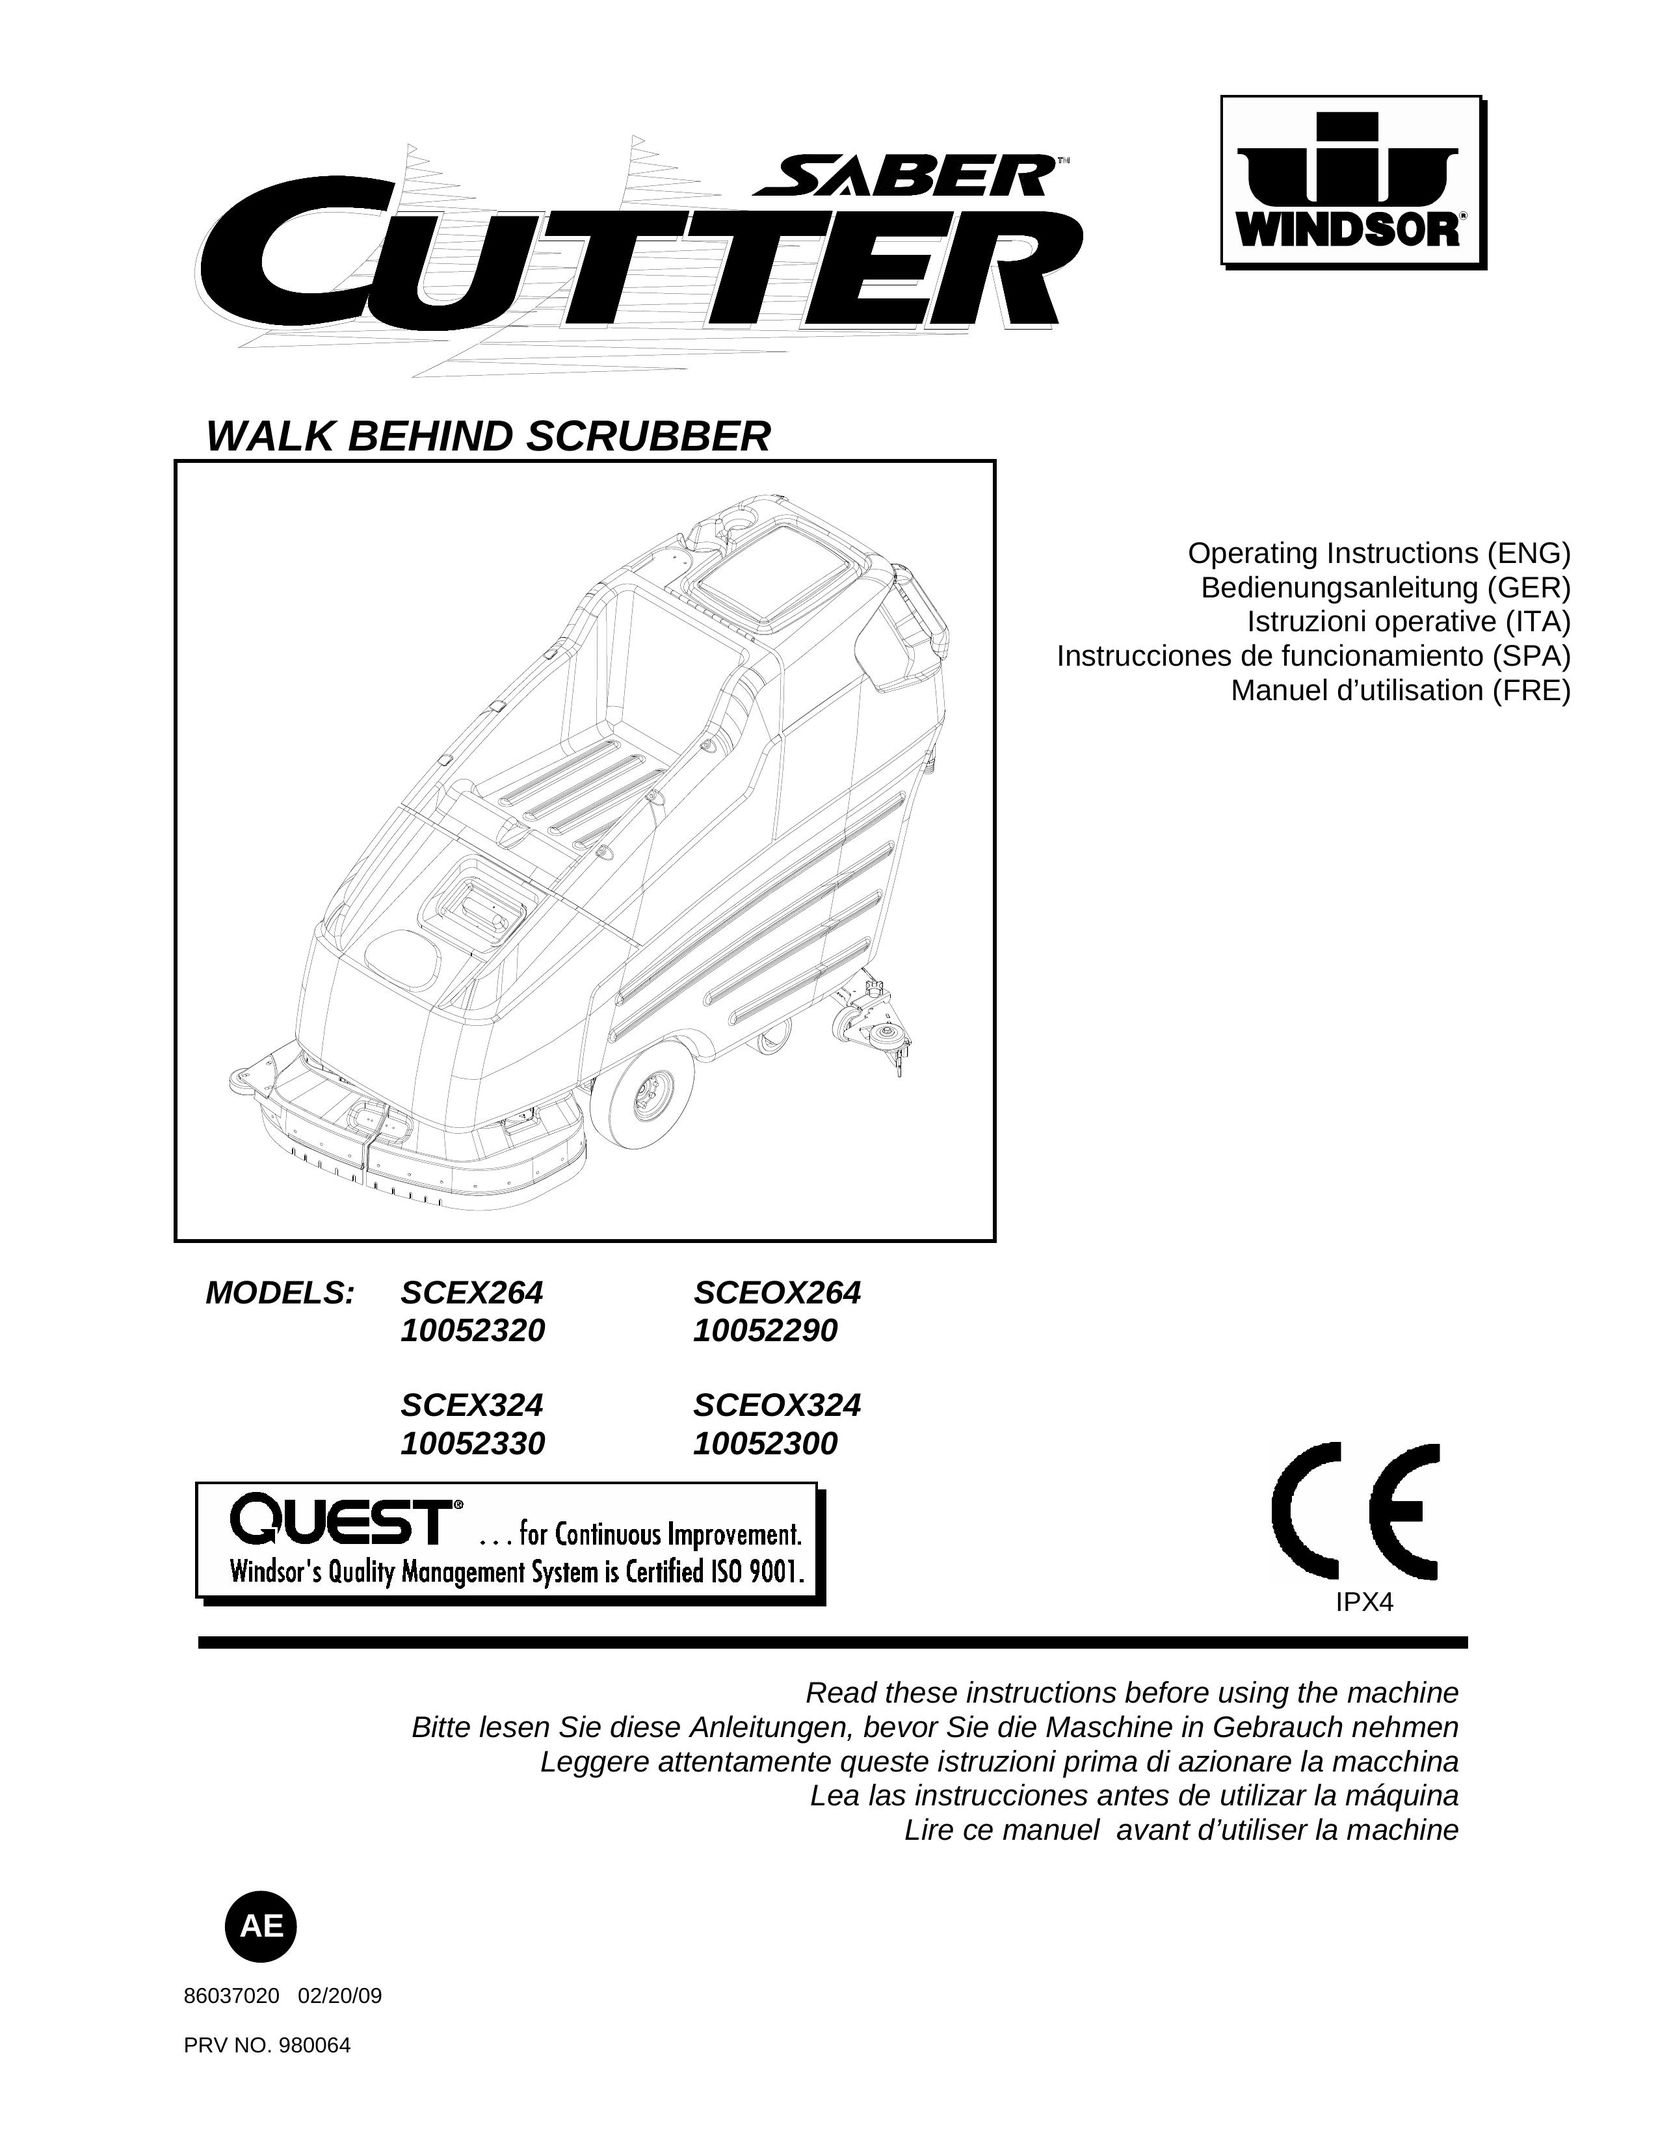 Windsor 86037020 Carpet Cleaner User Manual